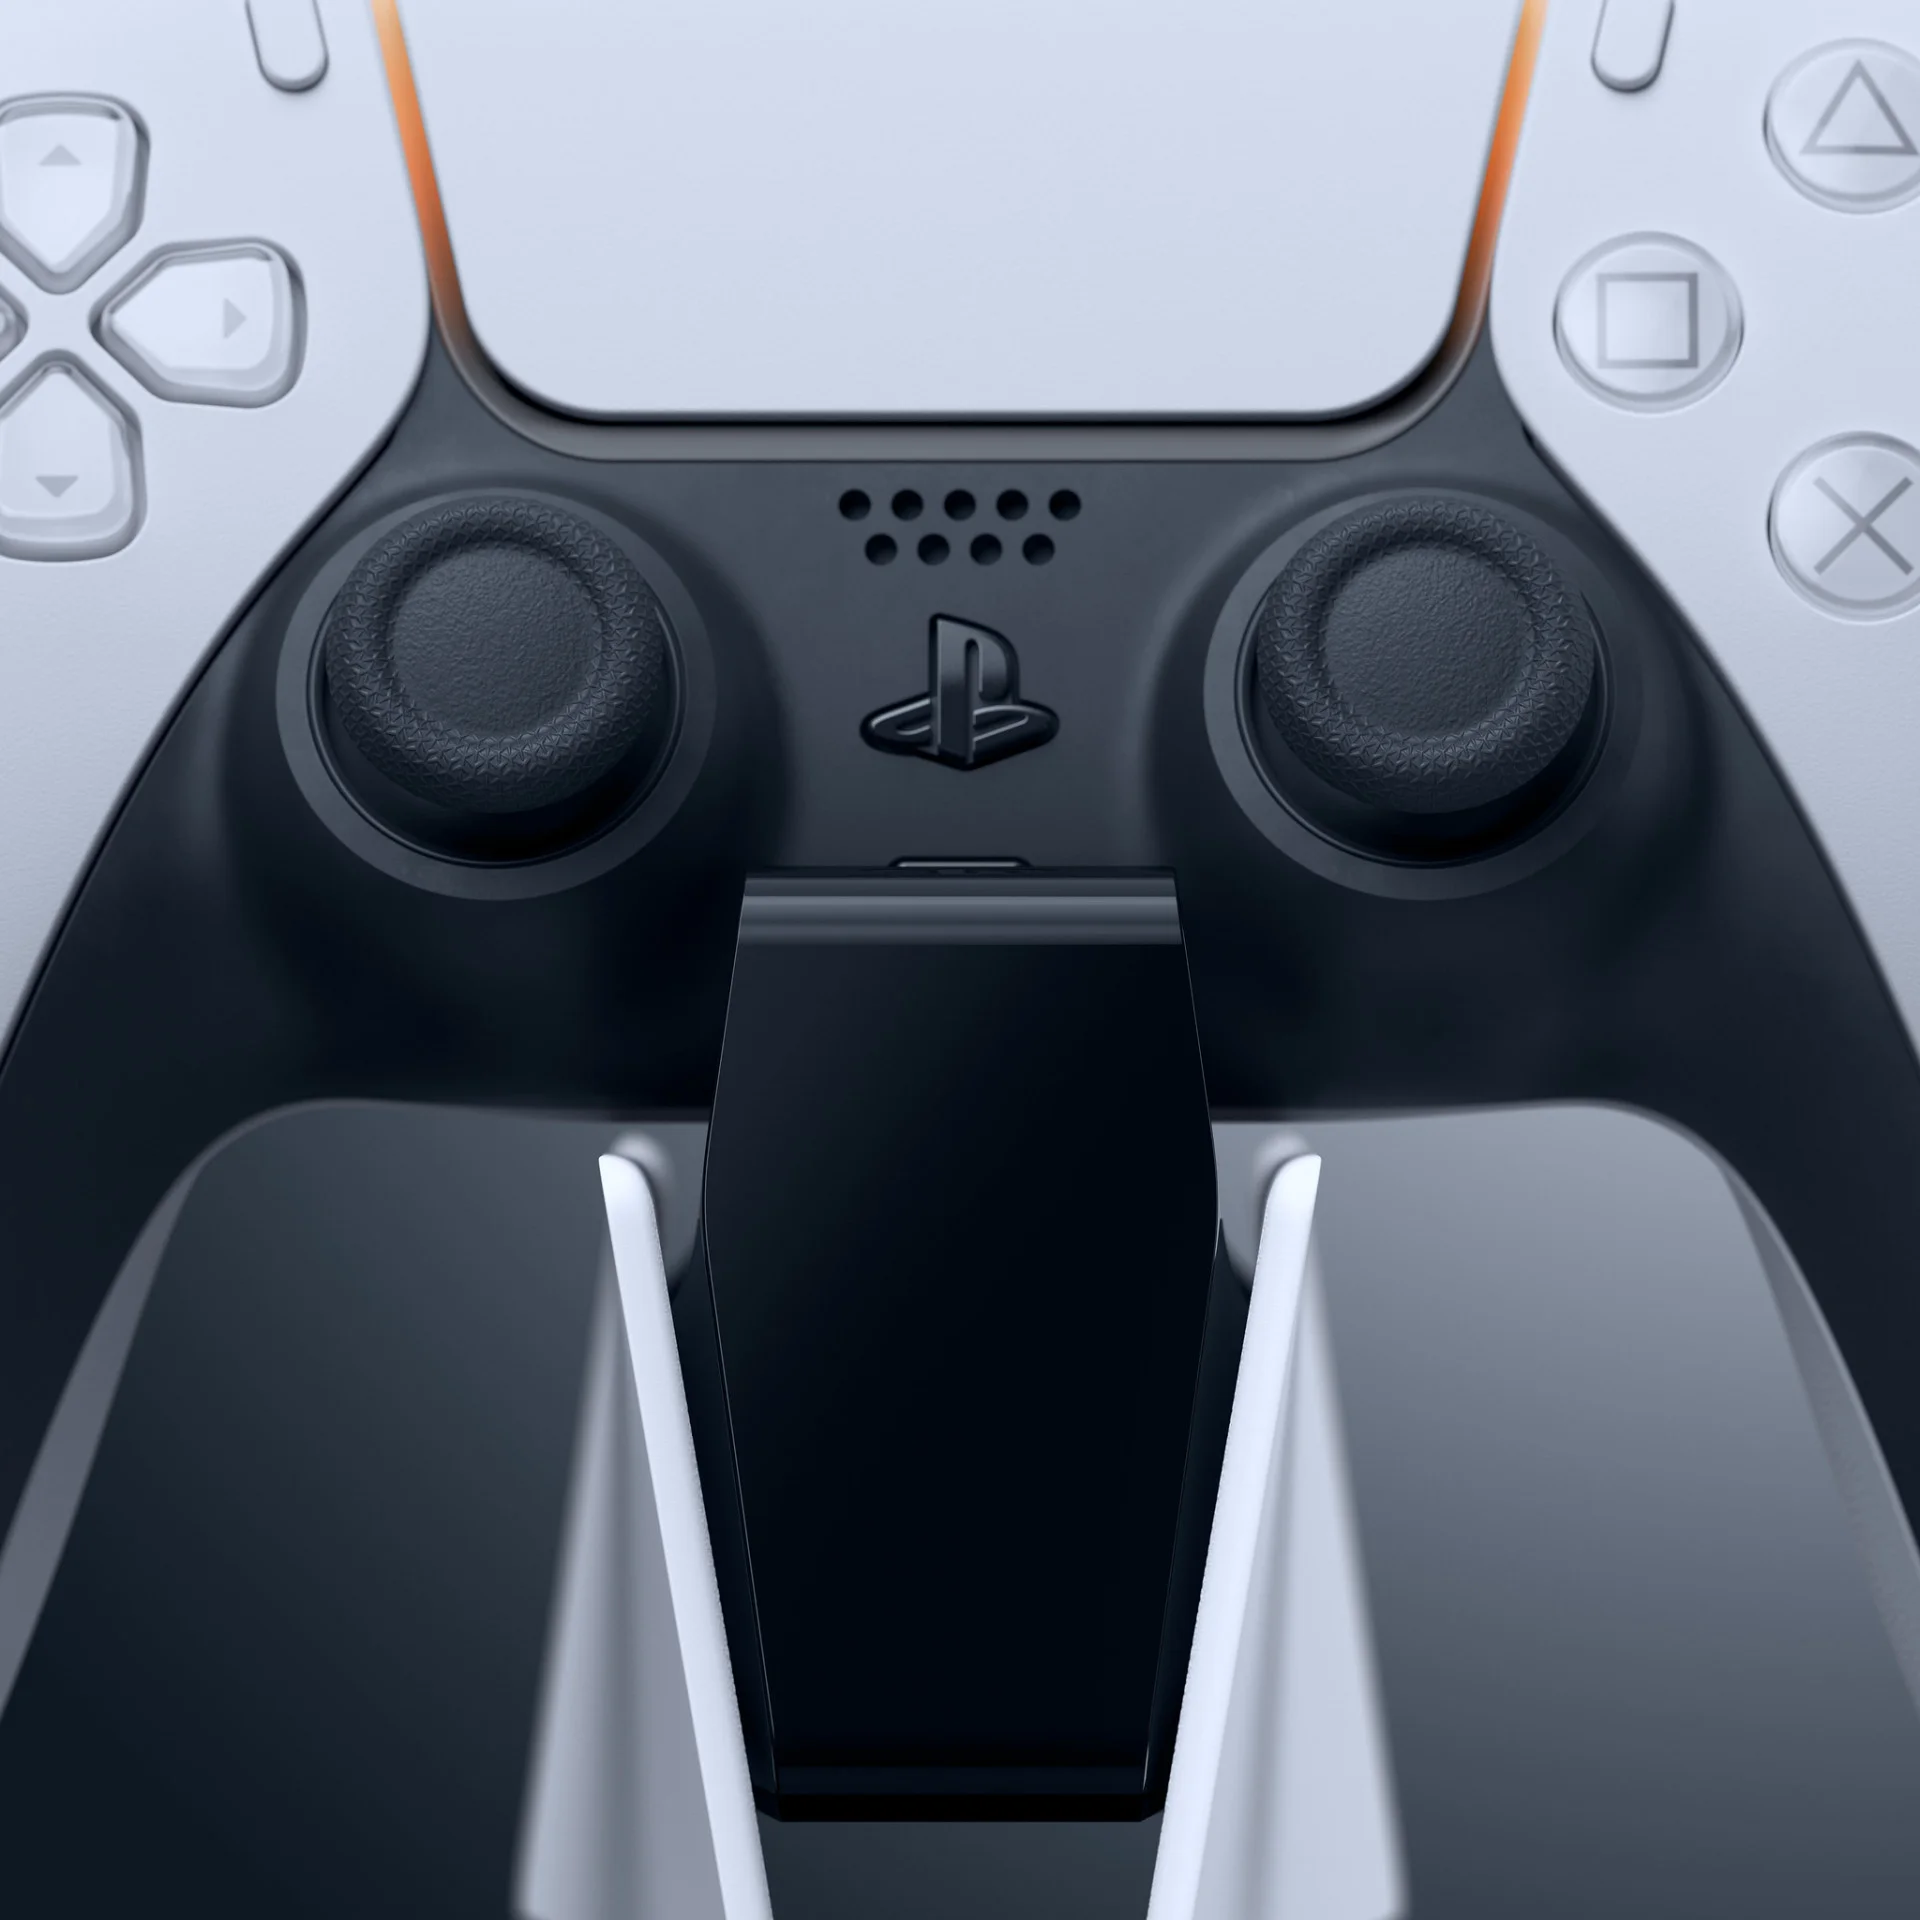 Sony выпустила 28 HQ-фото PlayStation 5 и её аксессуаров - фото 18